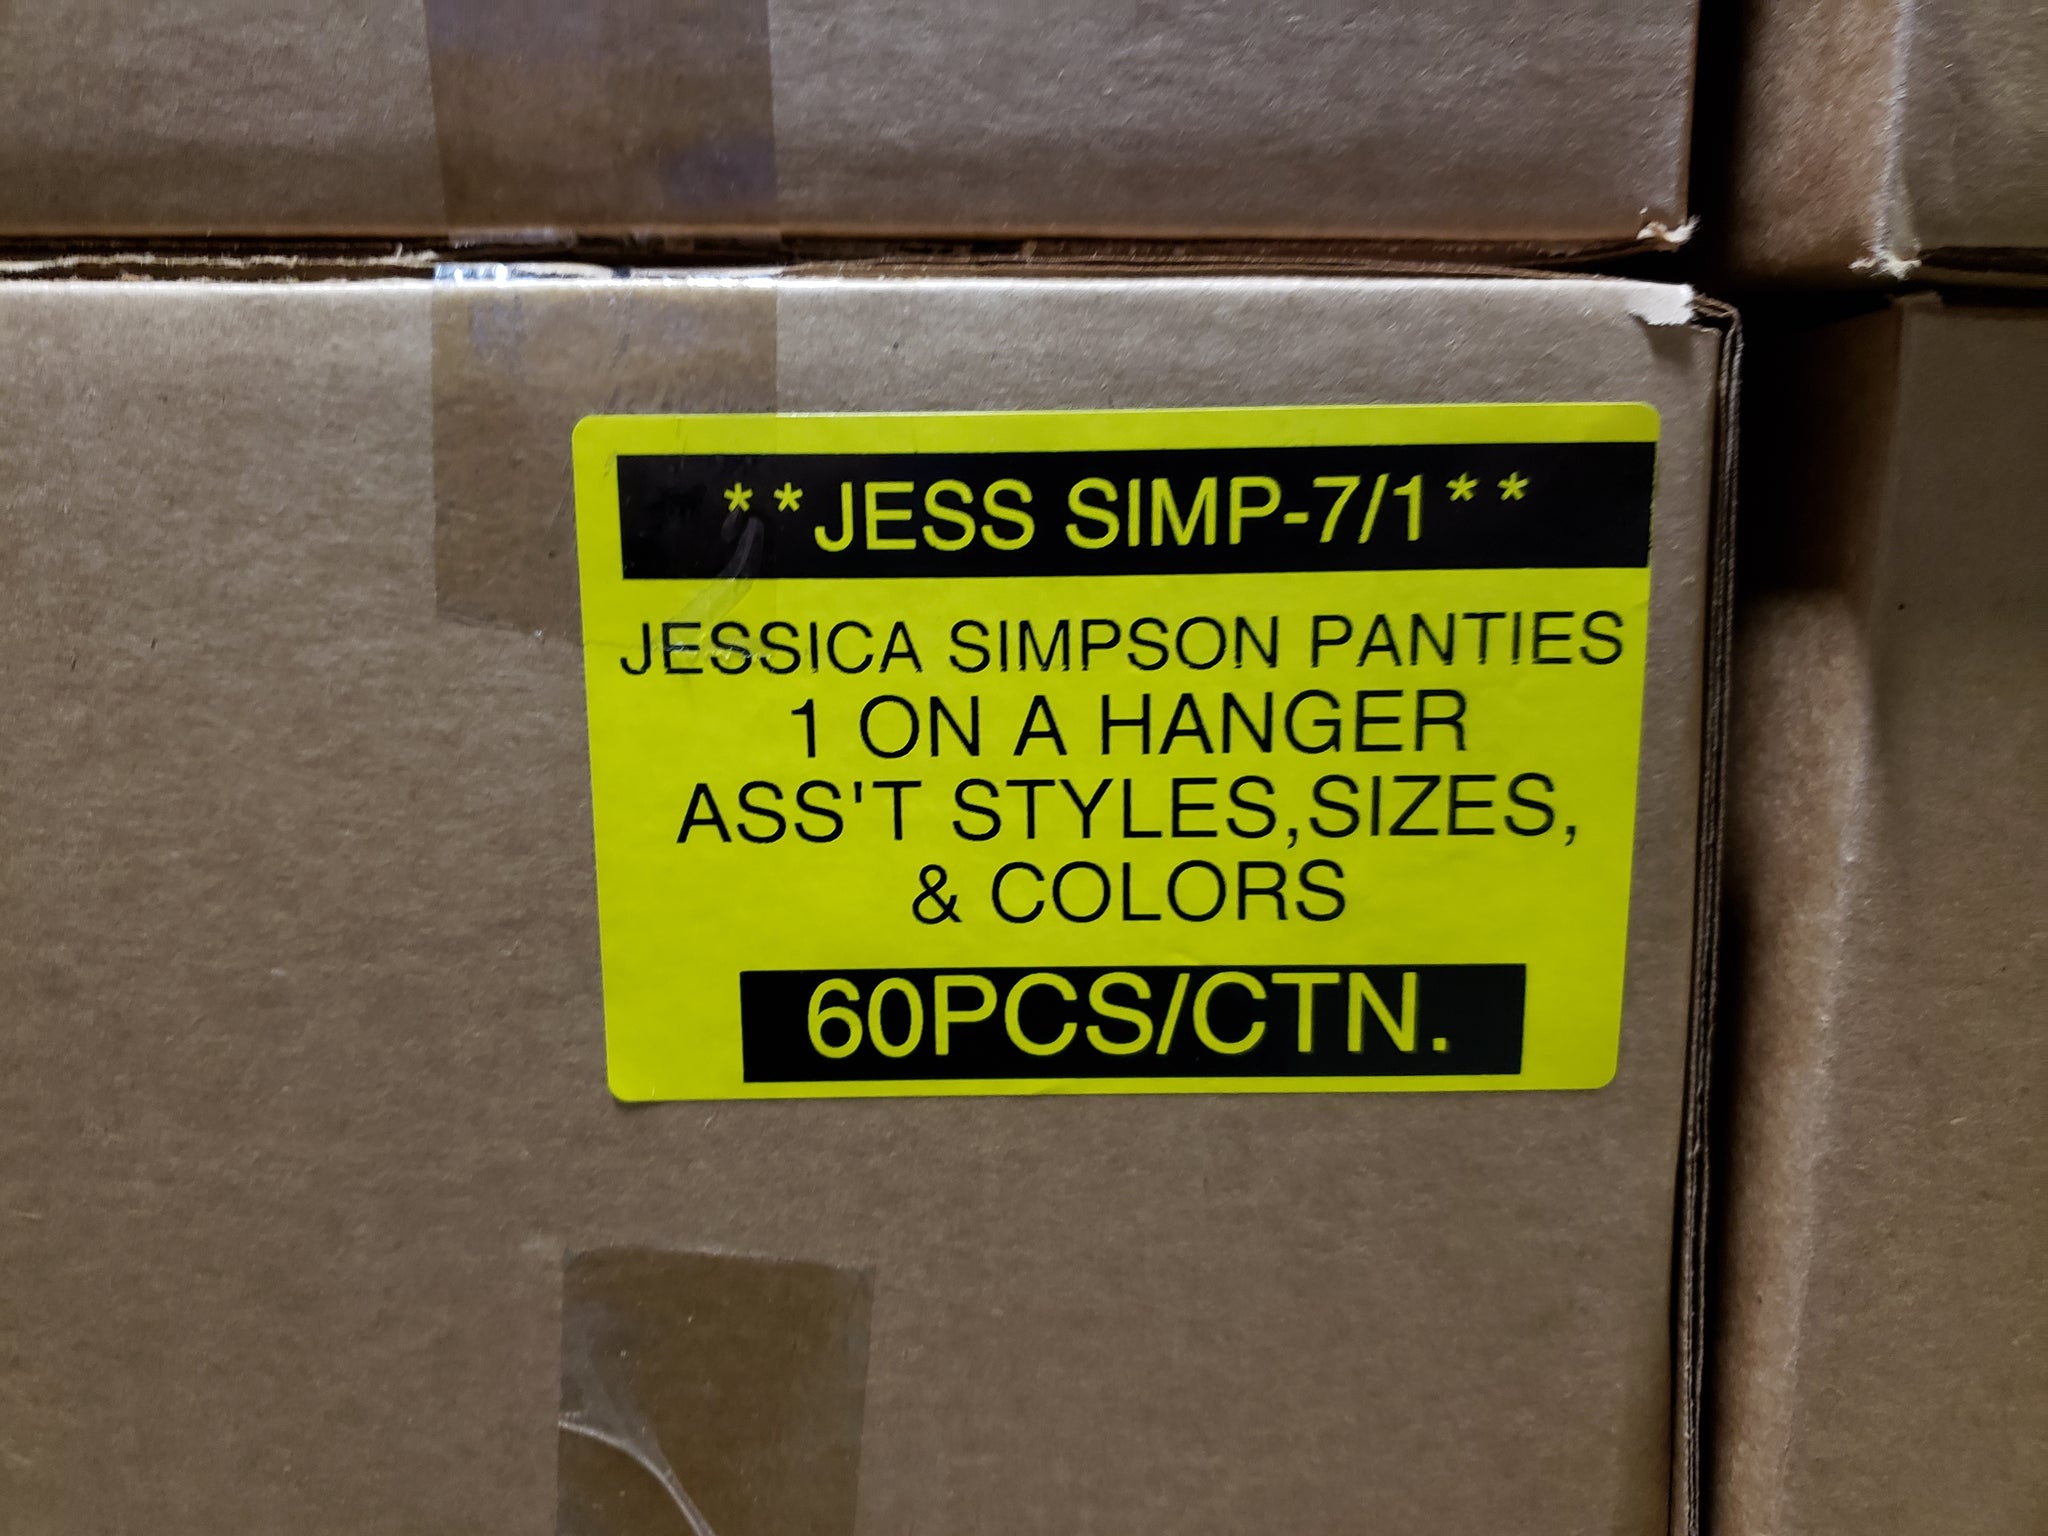 JESSICA SIMPSON PANTIES 1 ON A HANGER Style JESS SIMP-7/1